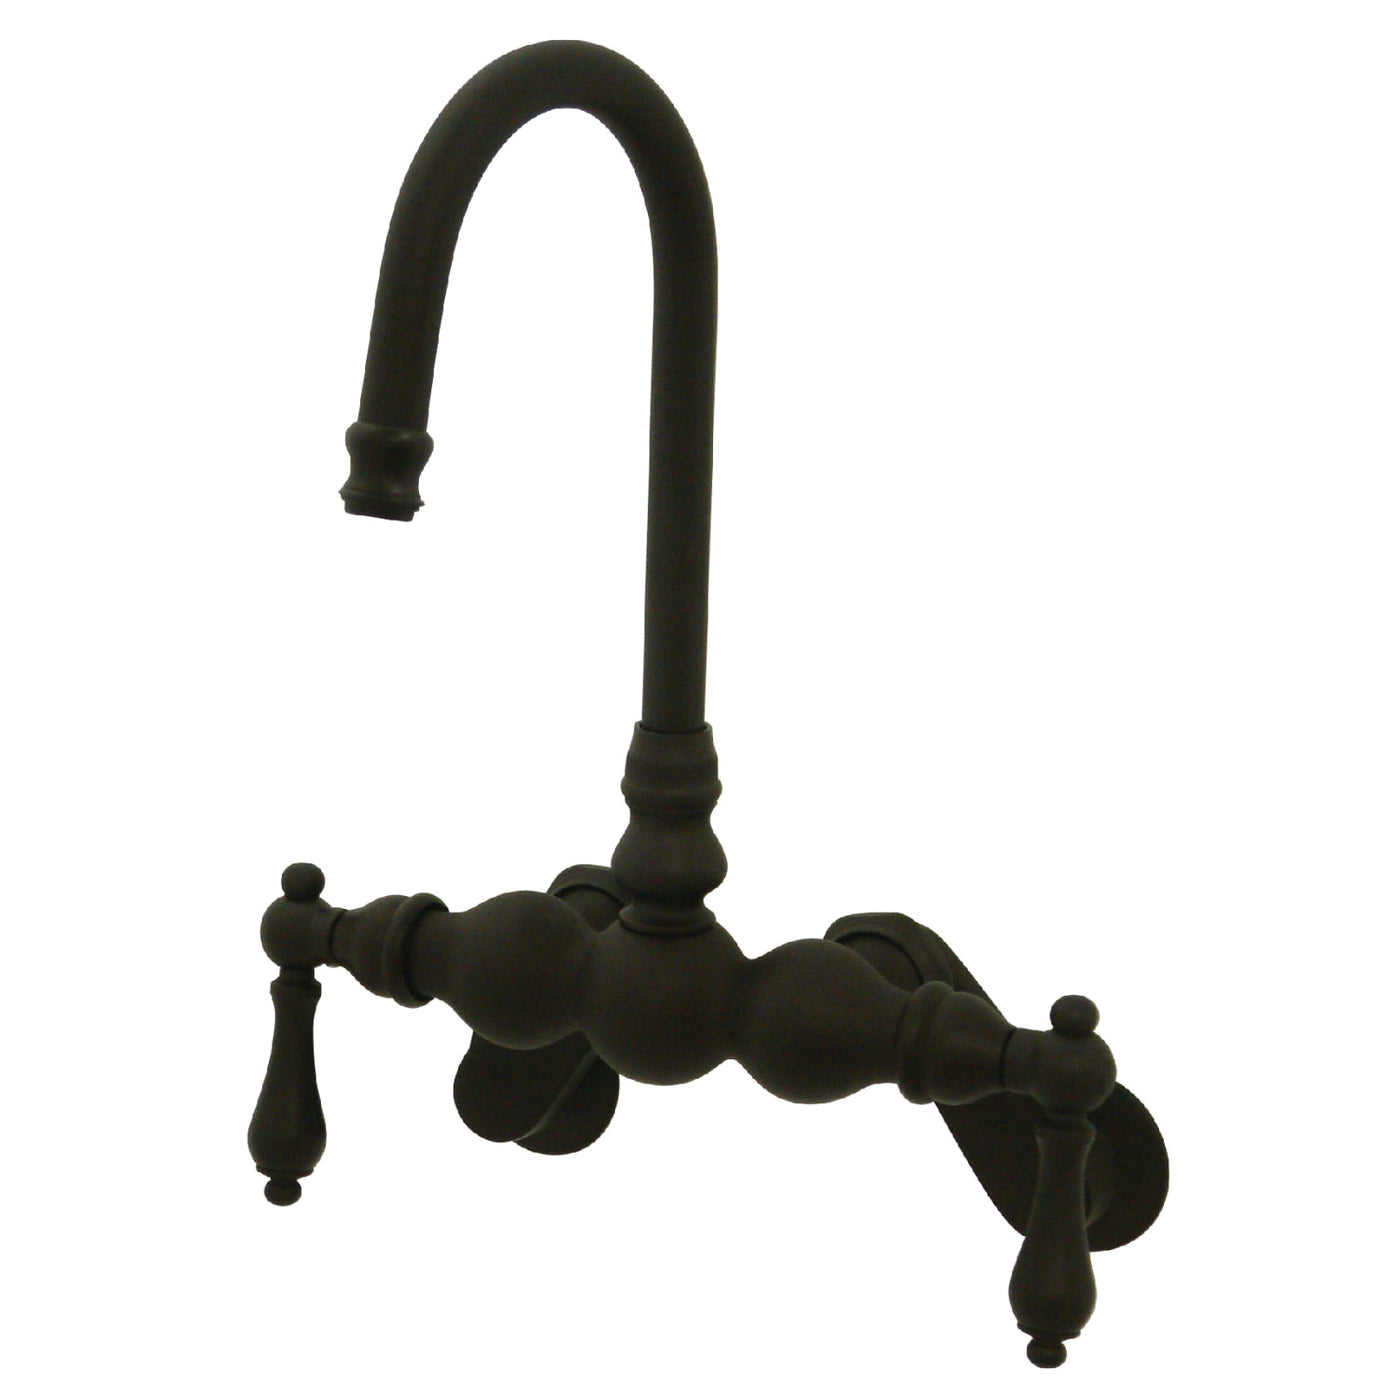 Elements of Design DT0815AL Adjustable Center Wall Mount Tub Faucet, Oil Rubbed Bronze